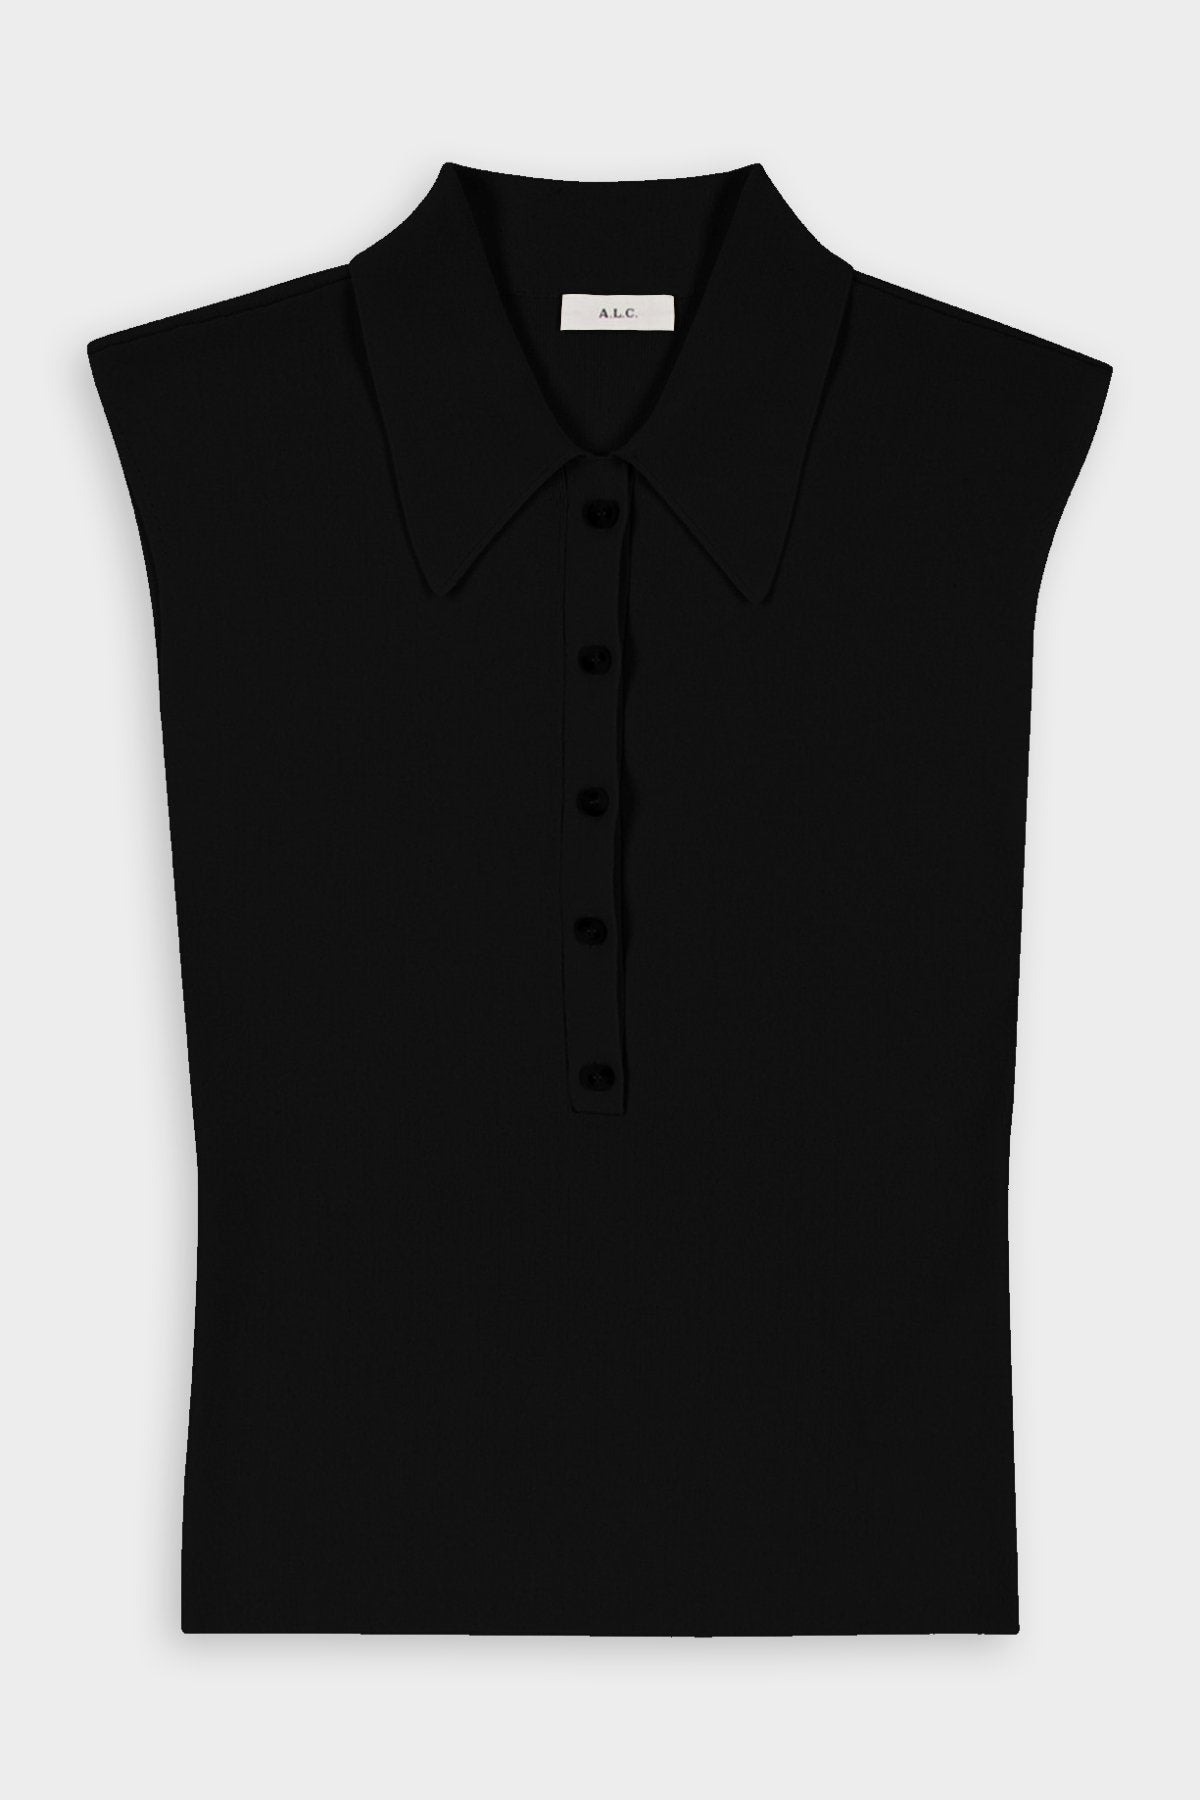 Taylor Knit Top in Black - shop-olivia.com